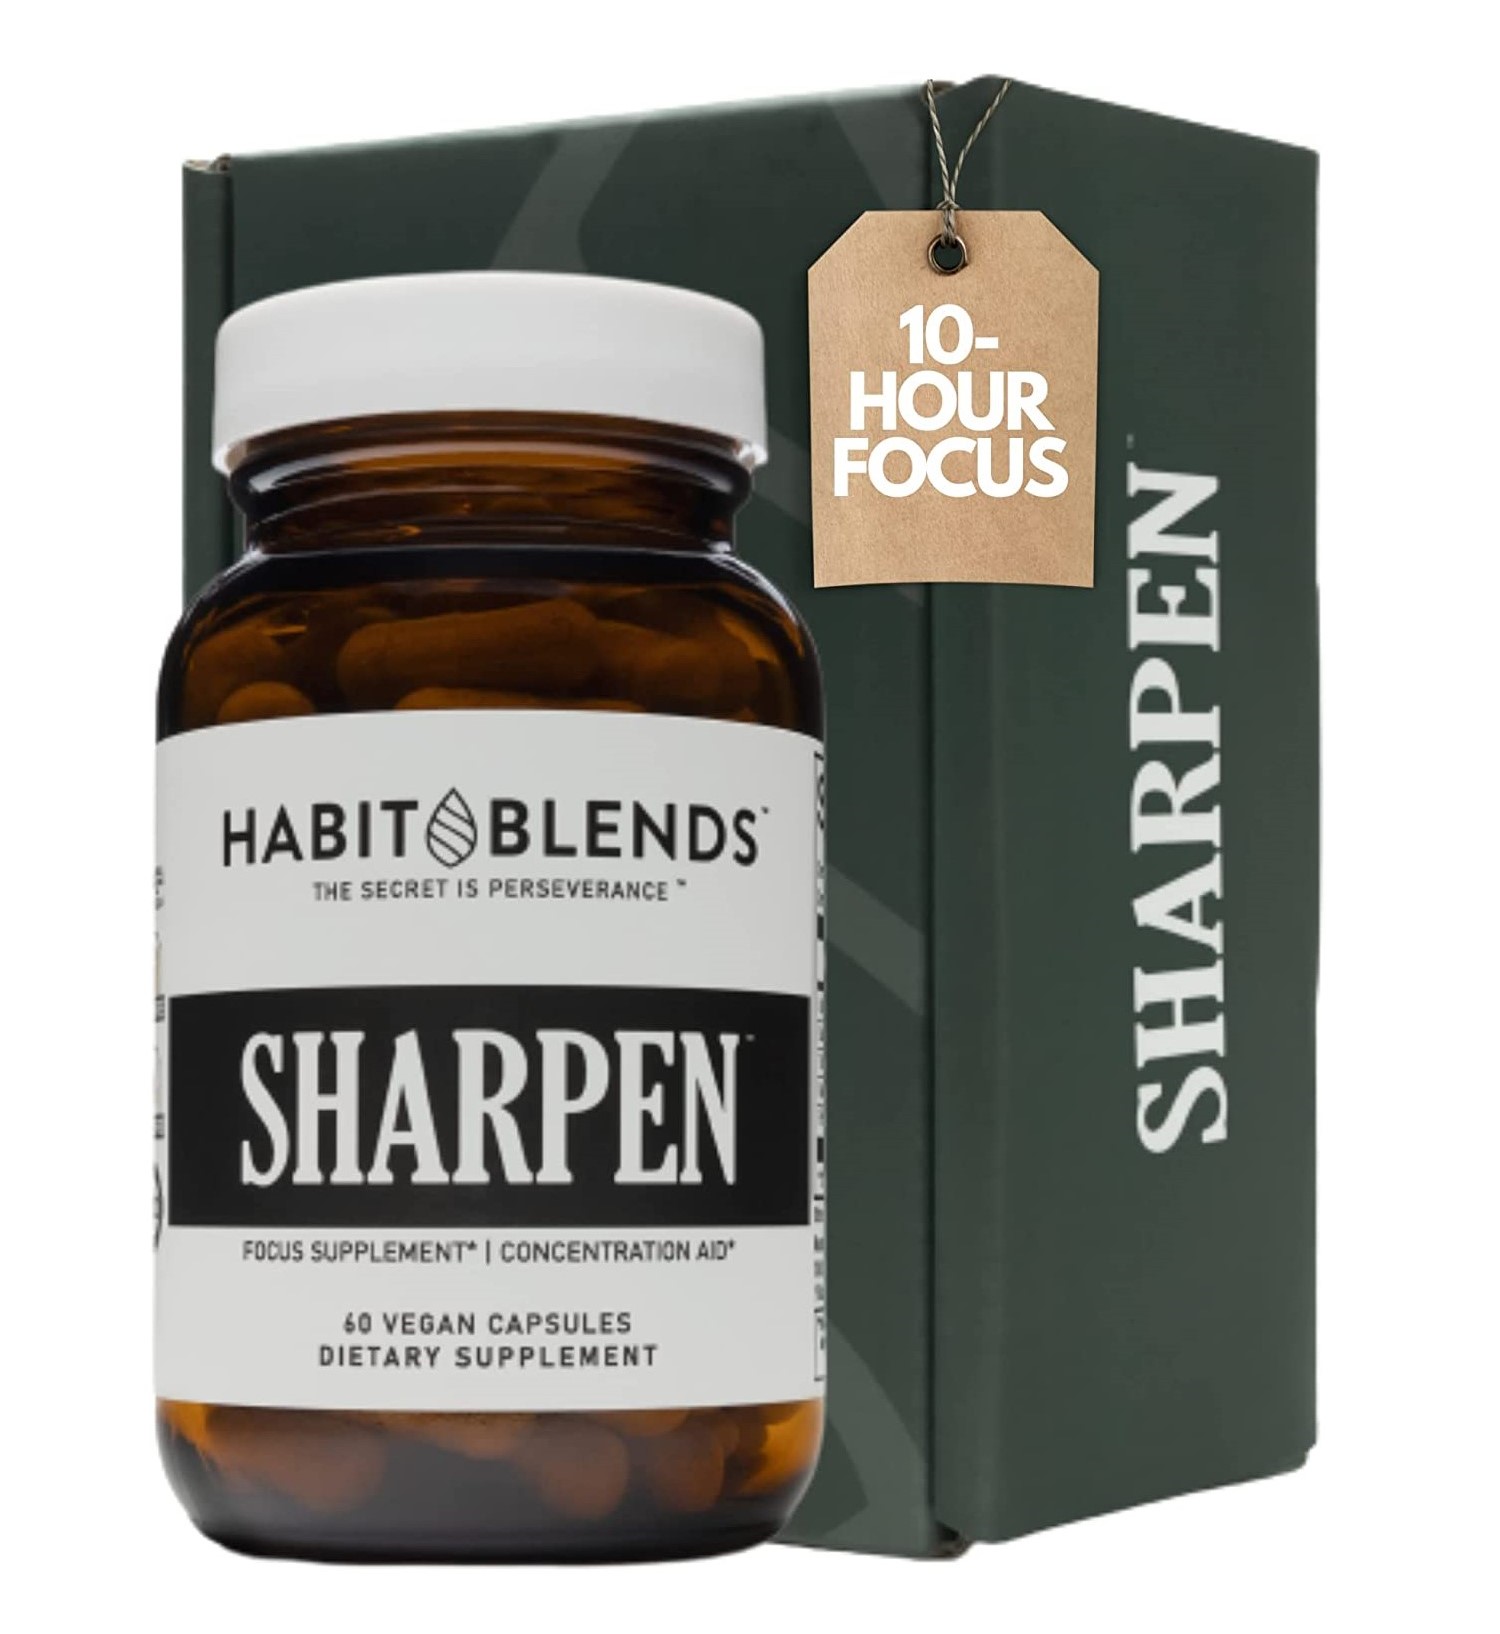 Habit Blends Sharpen Focus Supplement